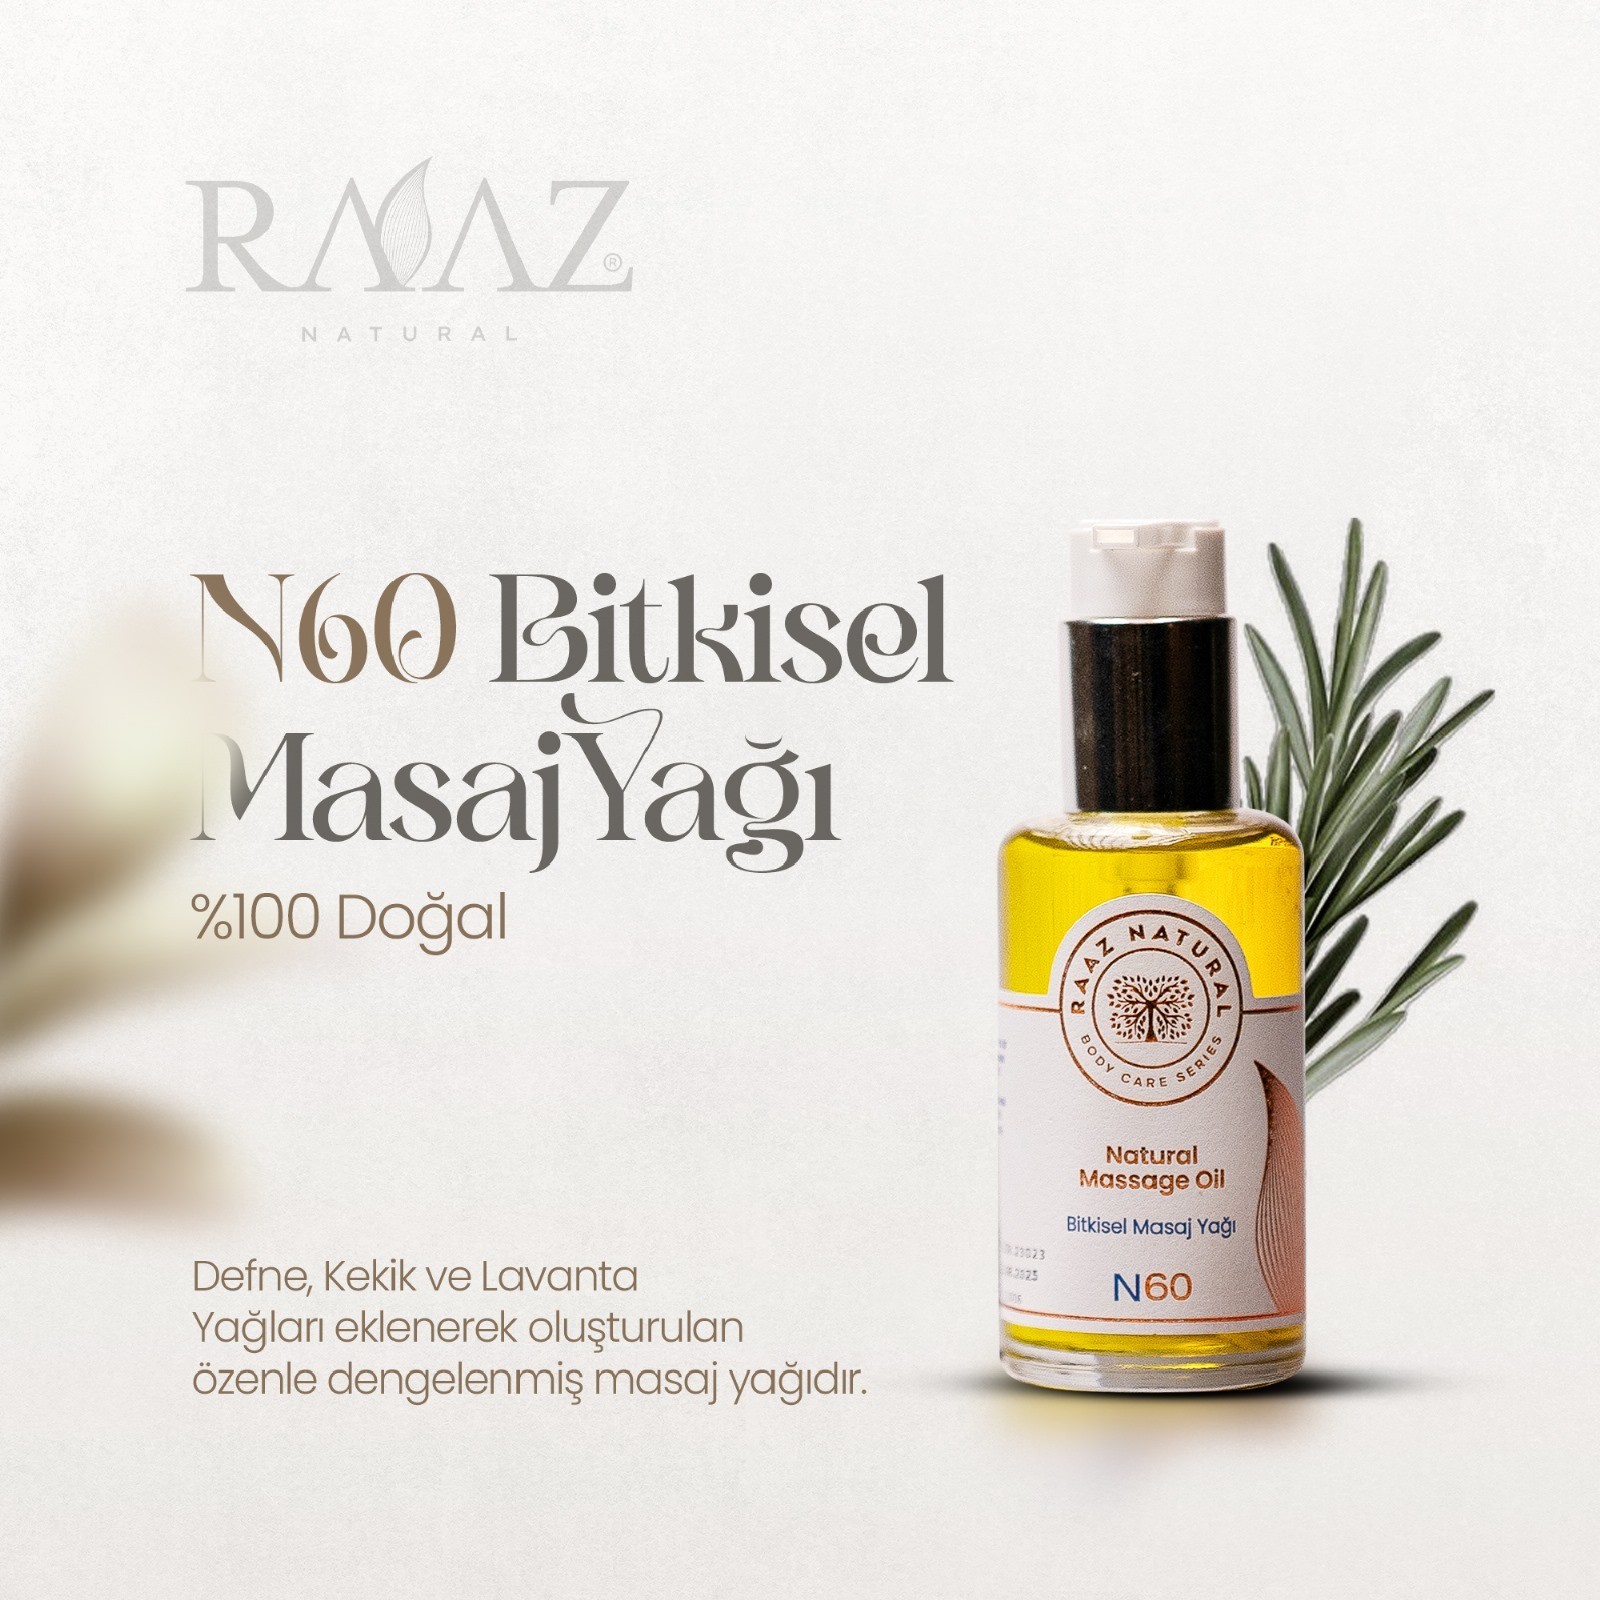 N60 Bitkisel Masaj Yağı Natural Massage Oil